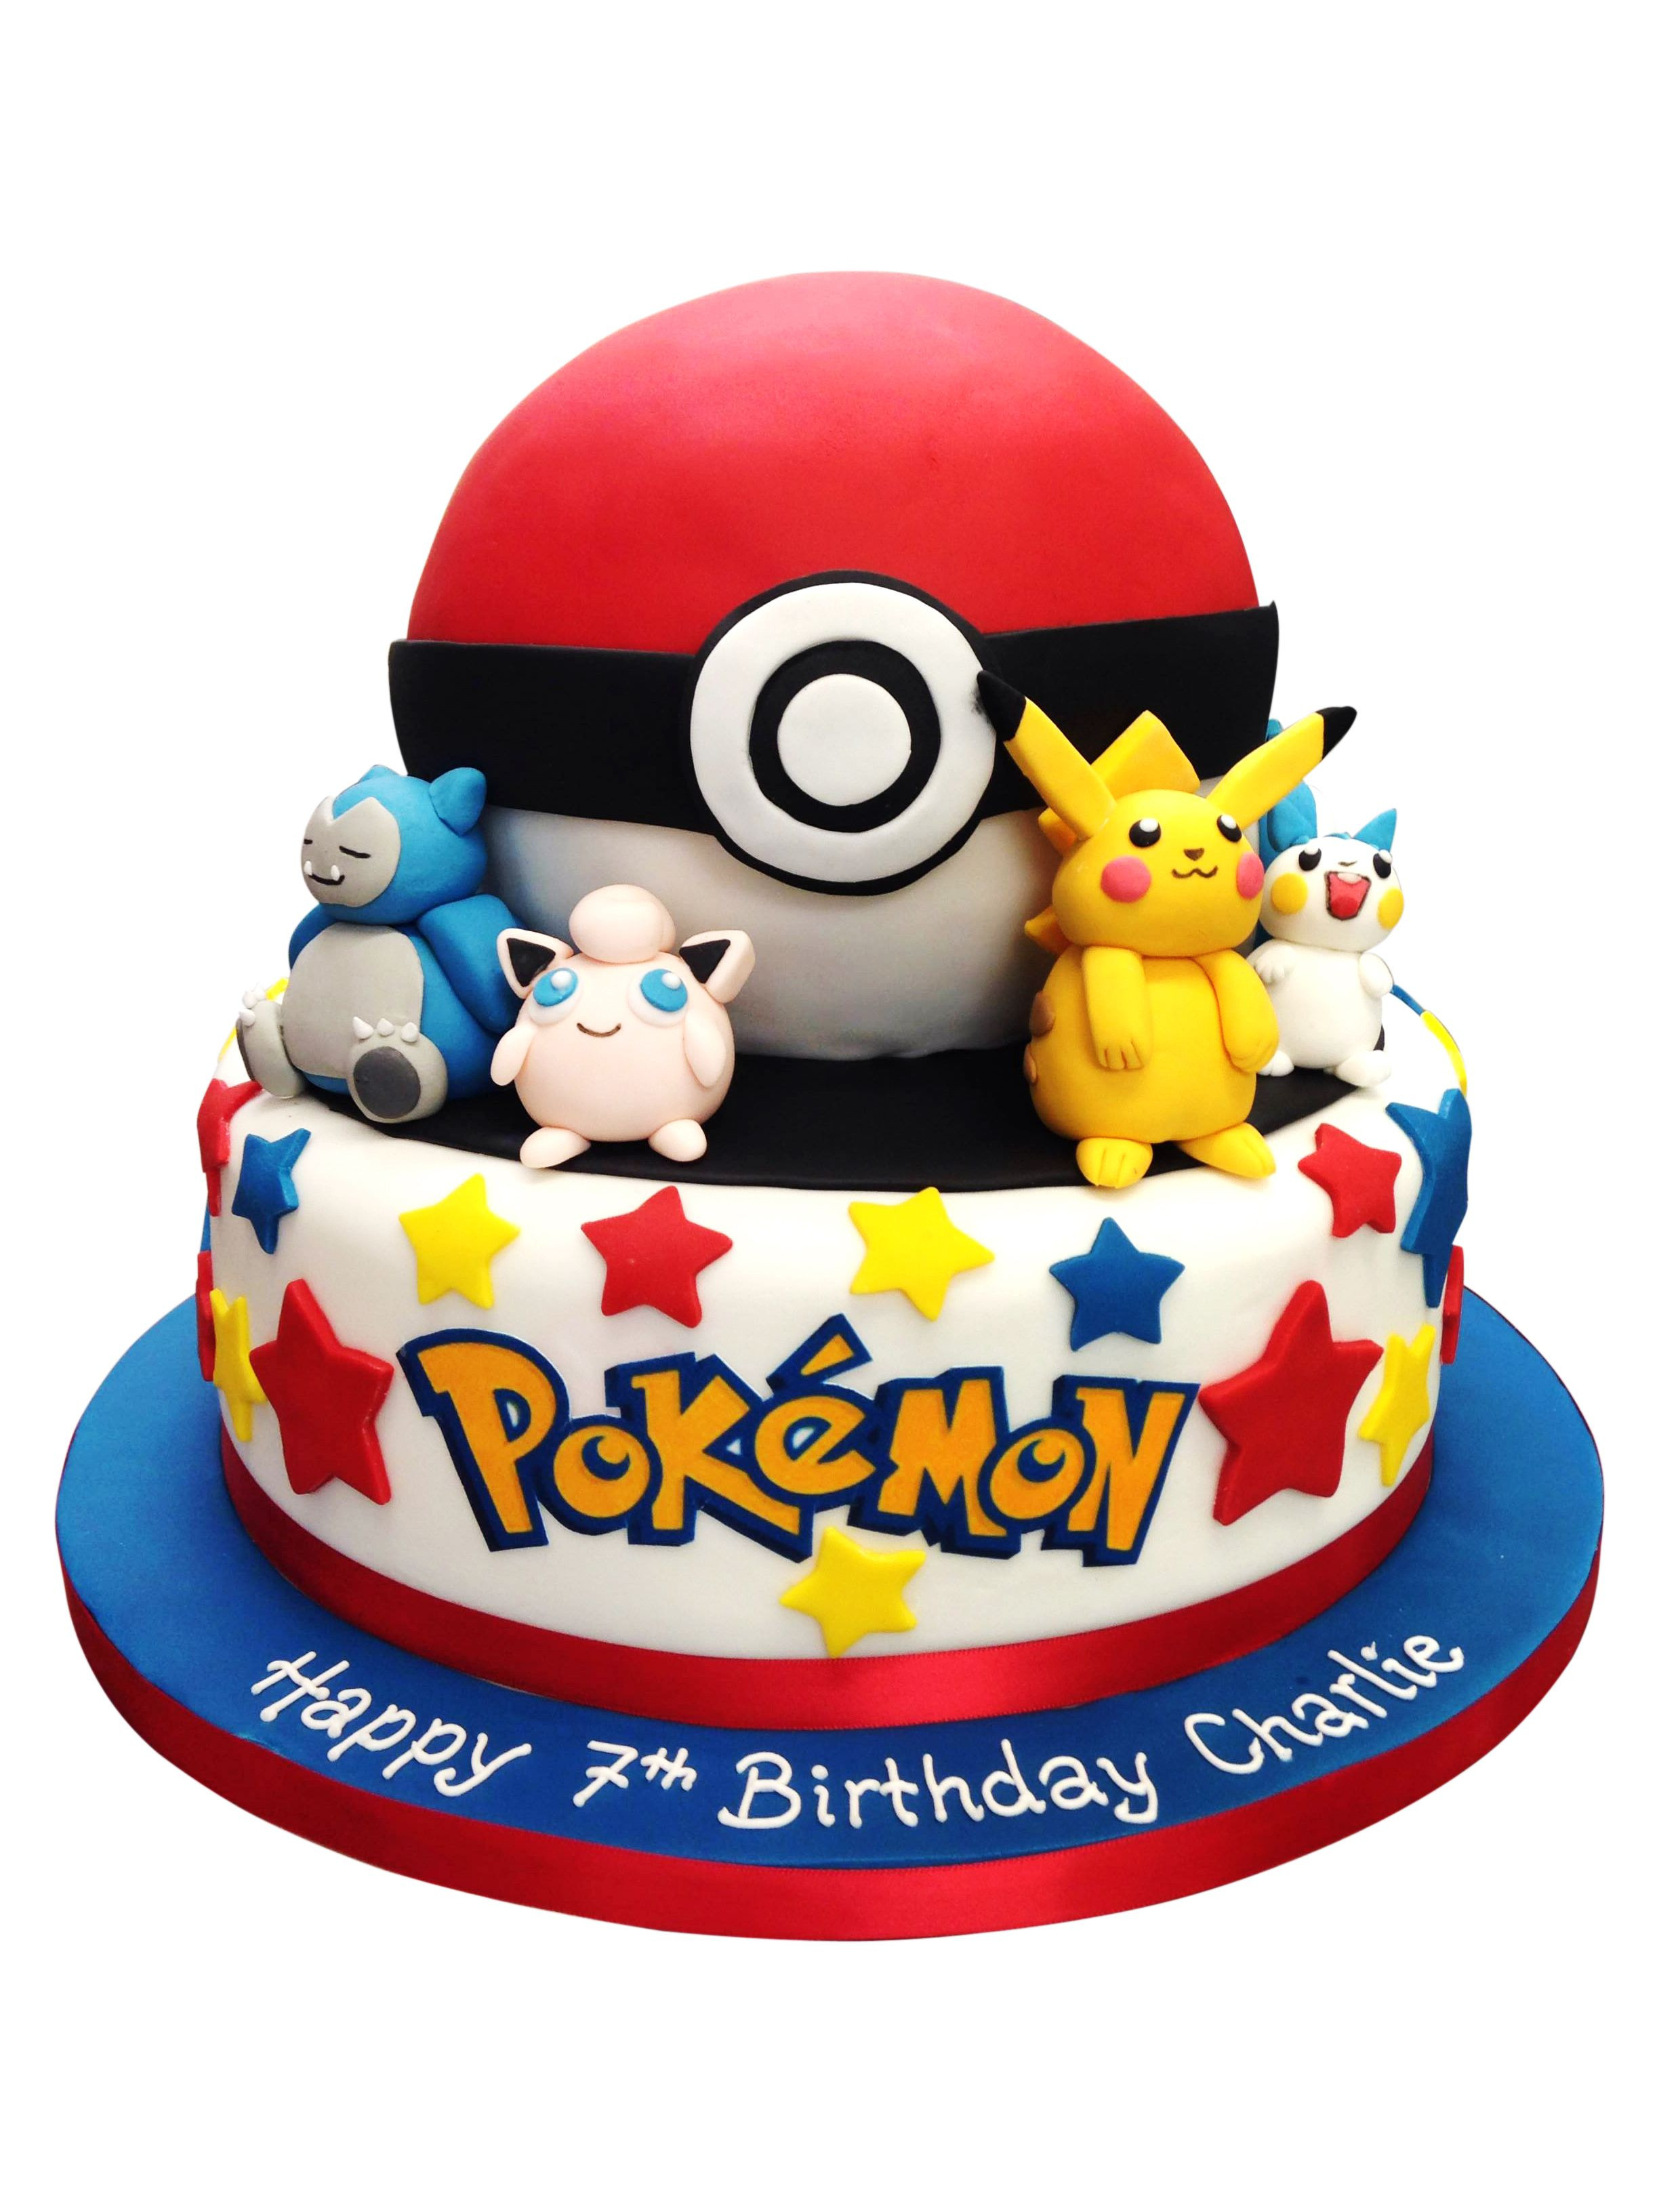 Best ideas about Pokemon Birthday Cake Ideas
. Save or Pin Best 25 Pokemon birthday cake ideas on Pinterest Now.